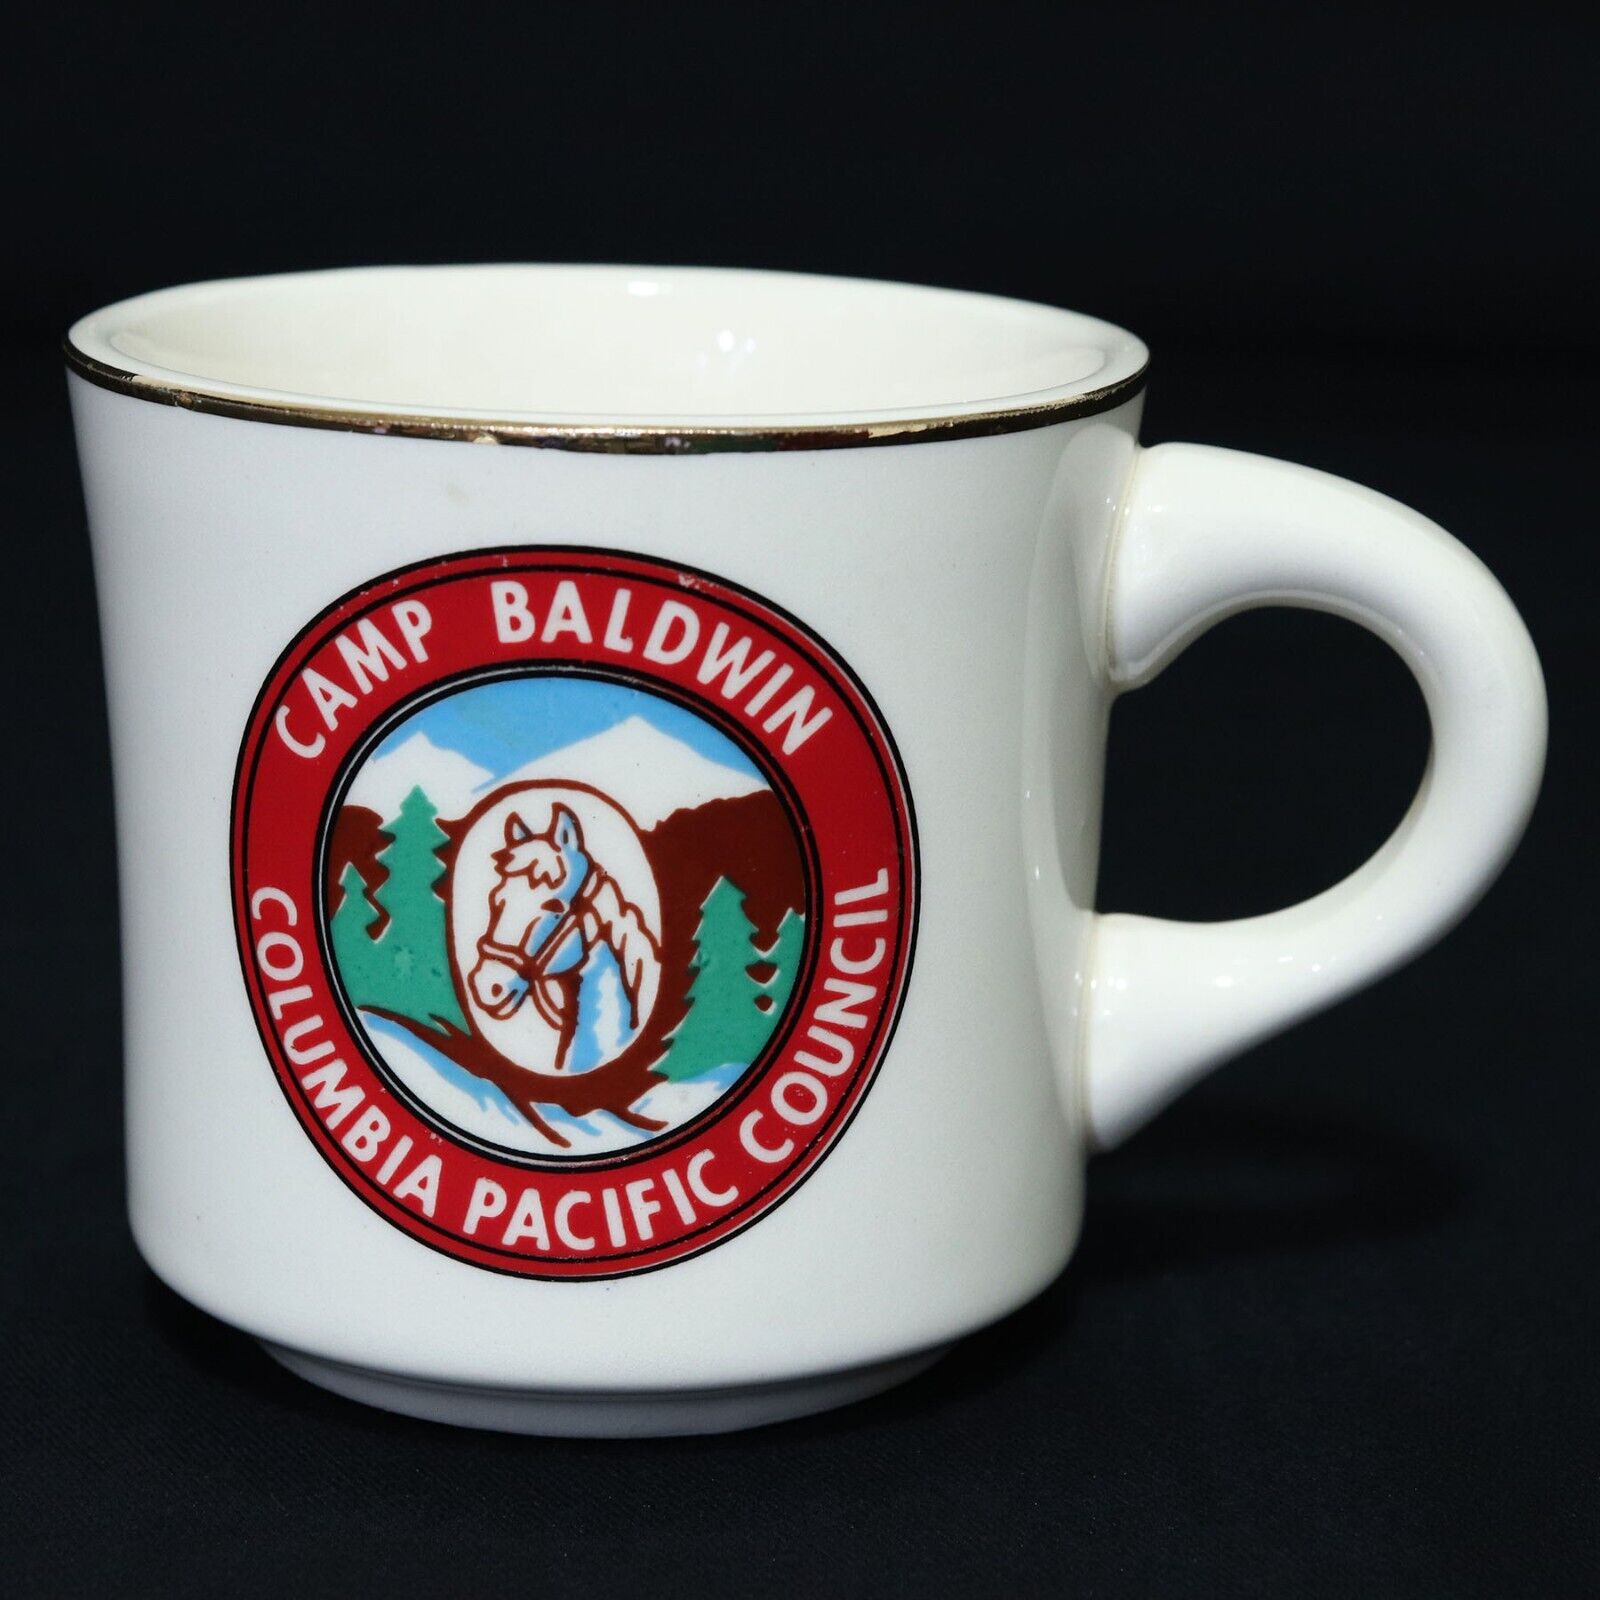 Boy Scouts VTG BSA Mug Cup, Camp Baldwin, Columbia Pacific Council, Horse - RARE